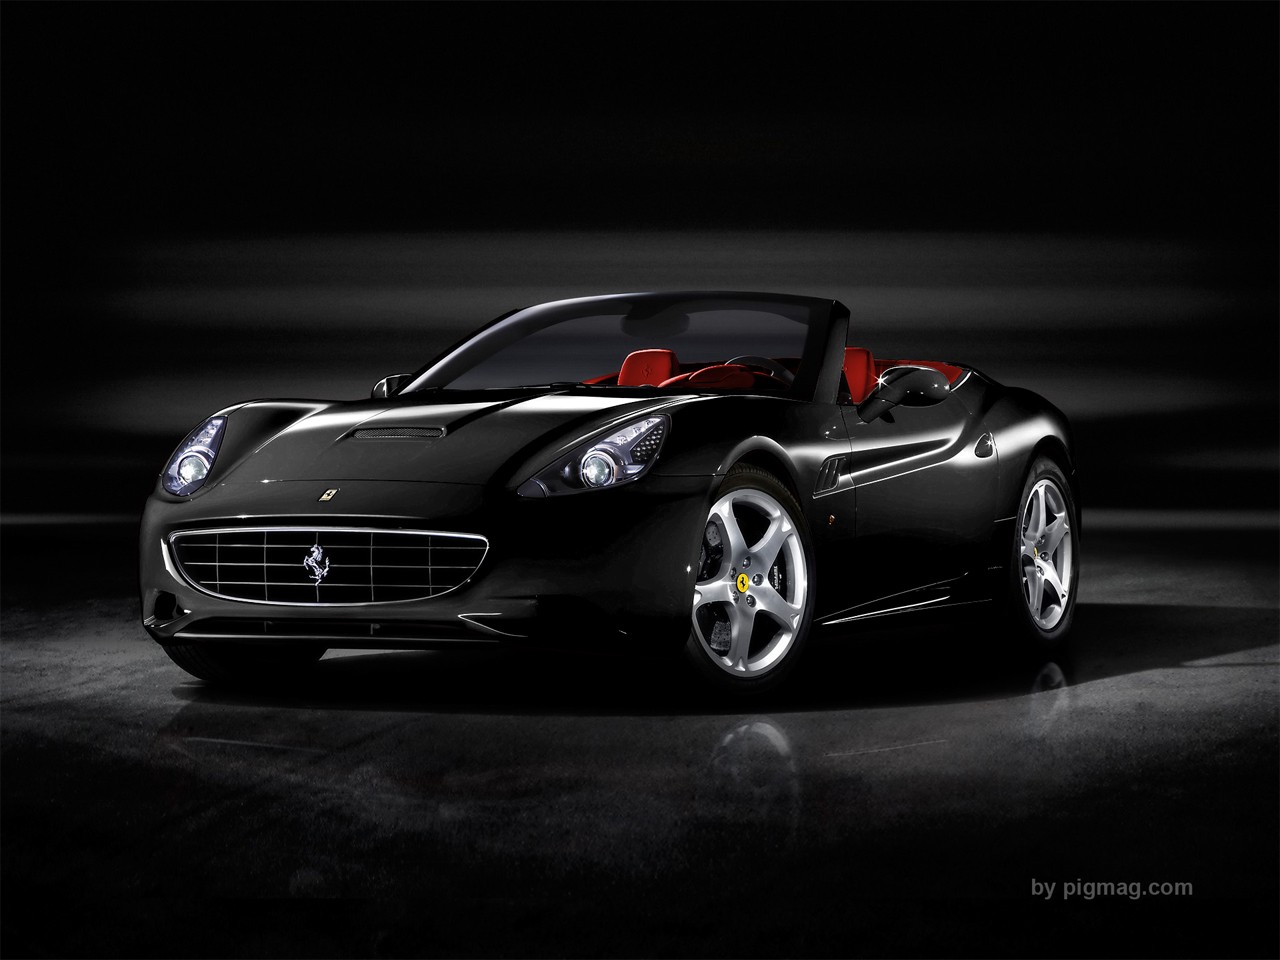 Ferrari Driving Experience on Ferrari California Performances Are Electrifying And The Car Handling